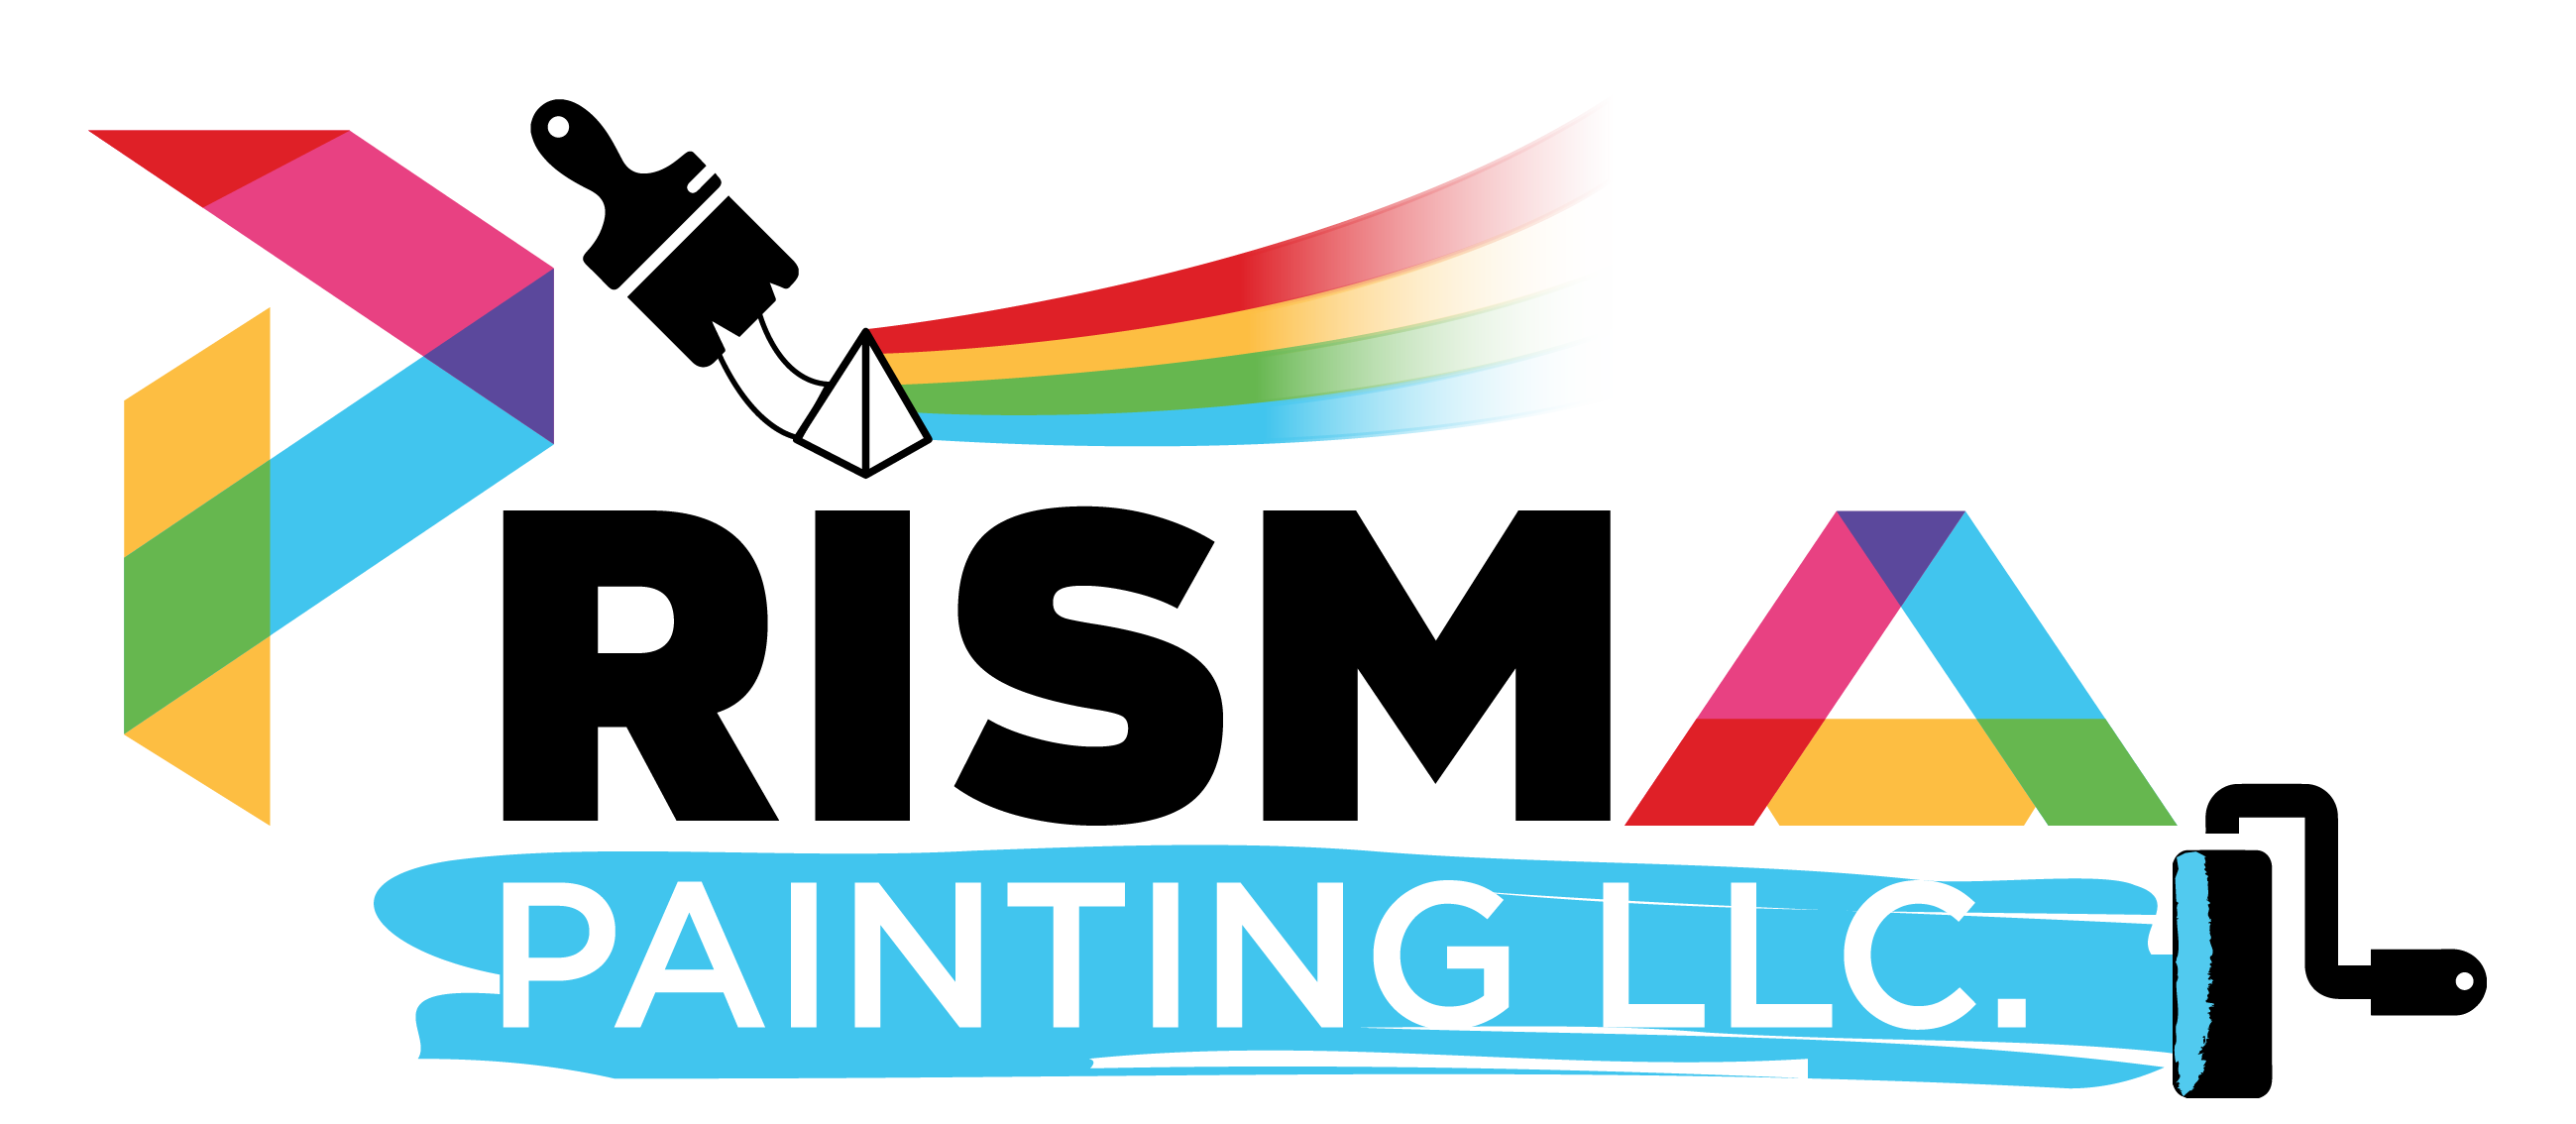 Prisma Painting LLC Logo